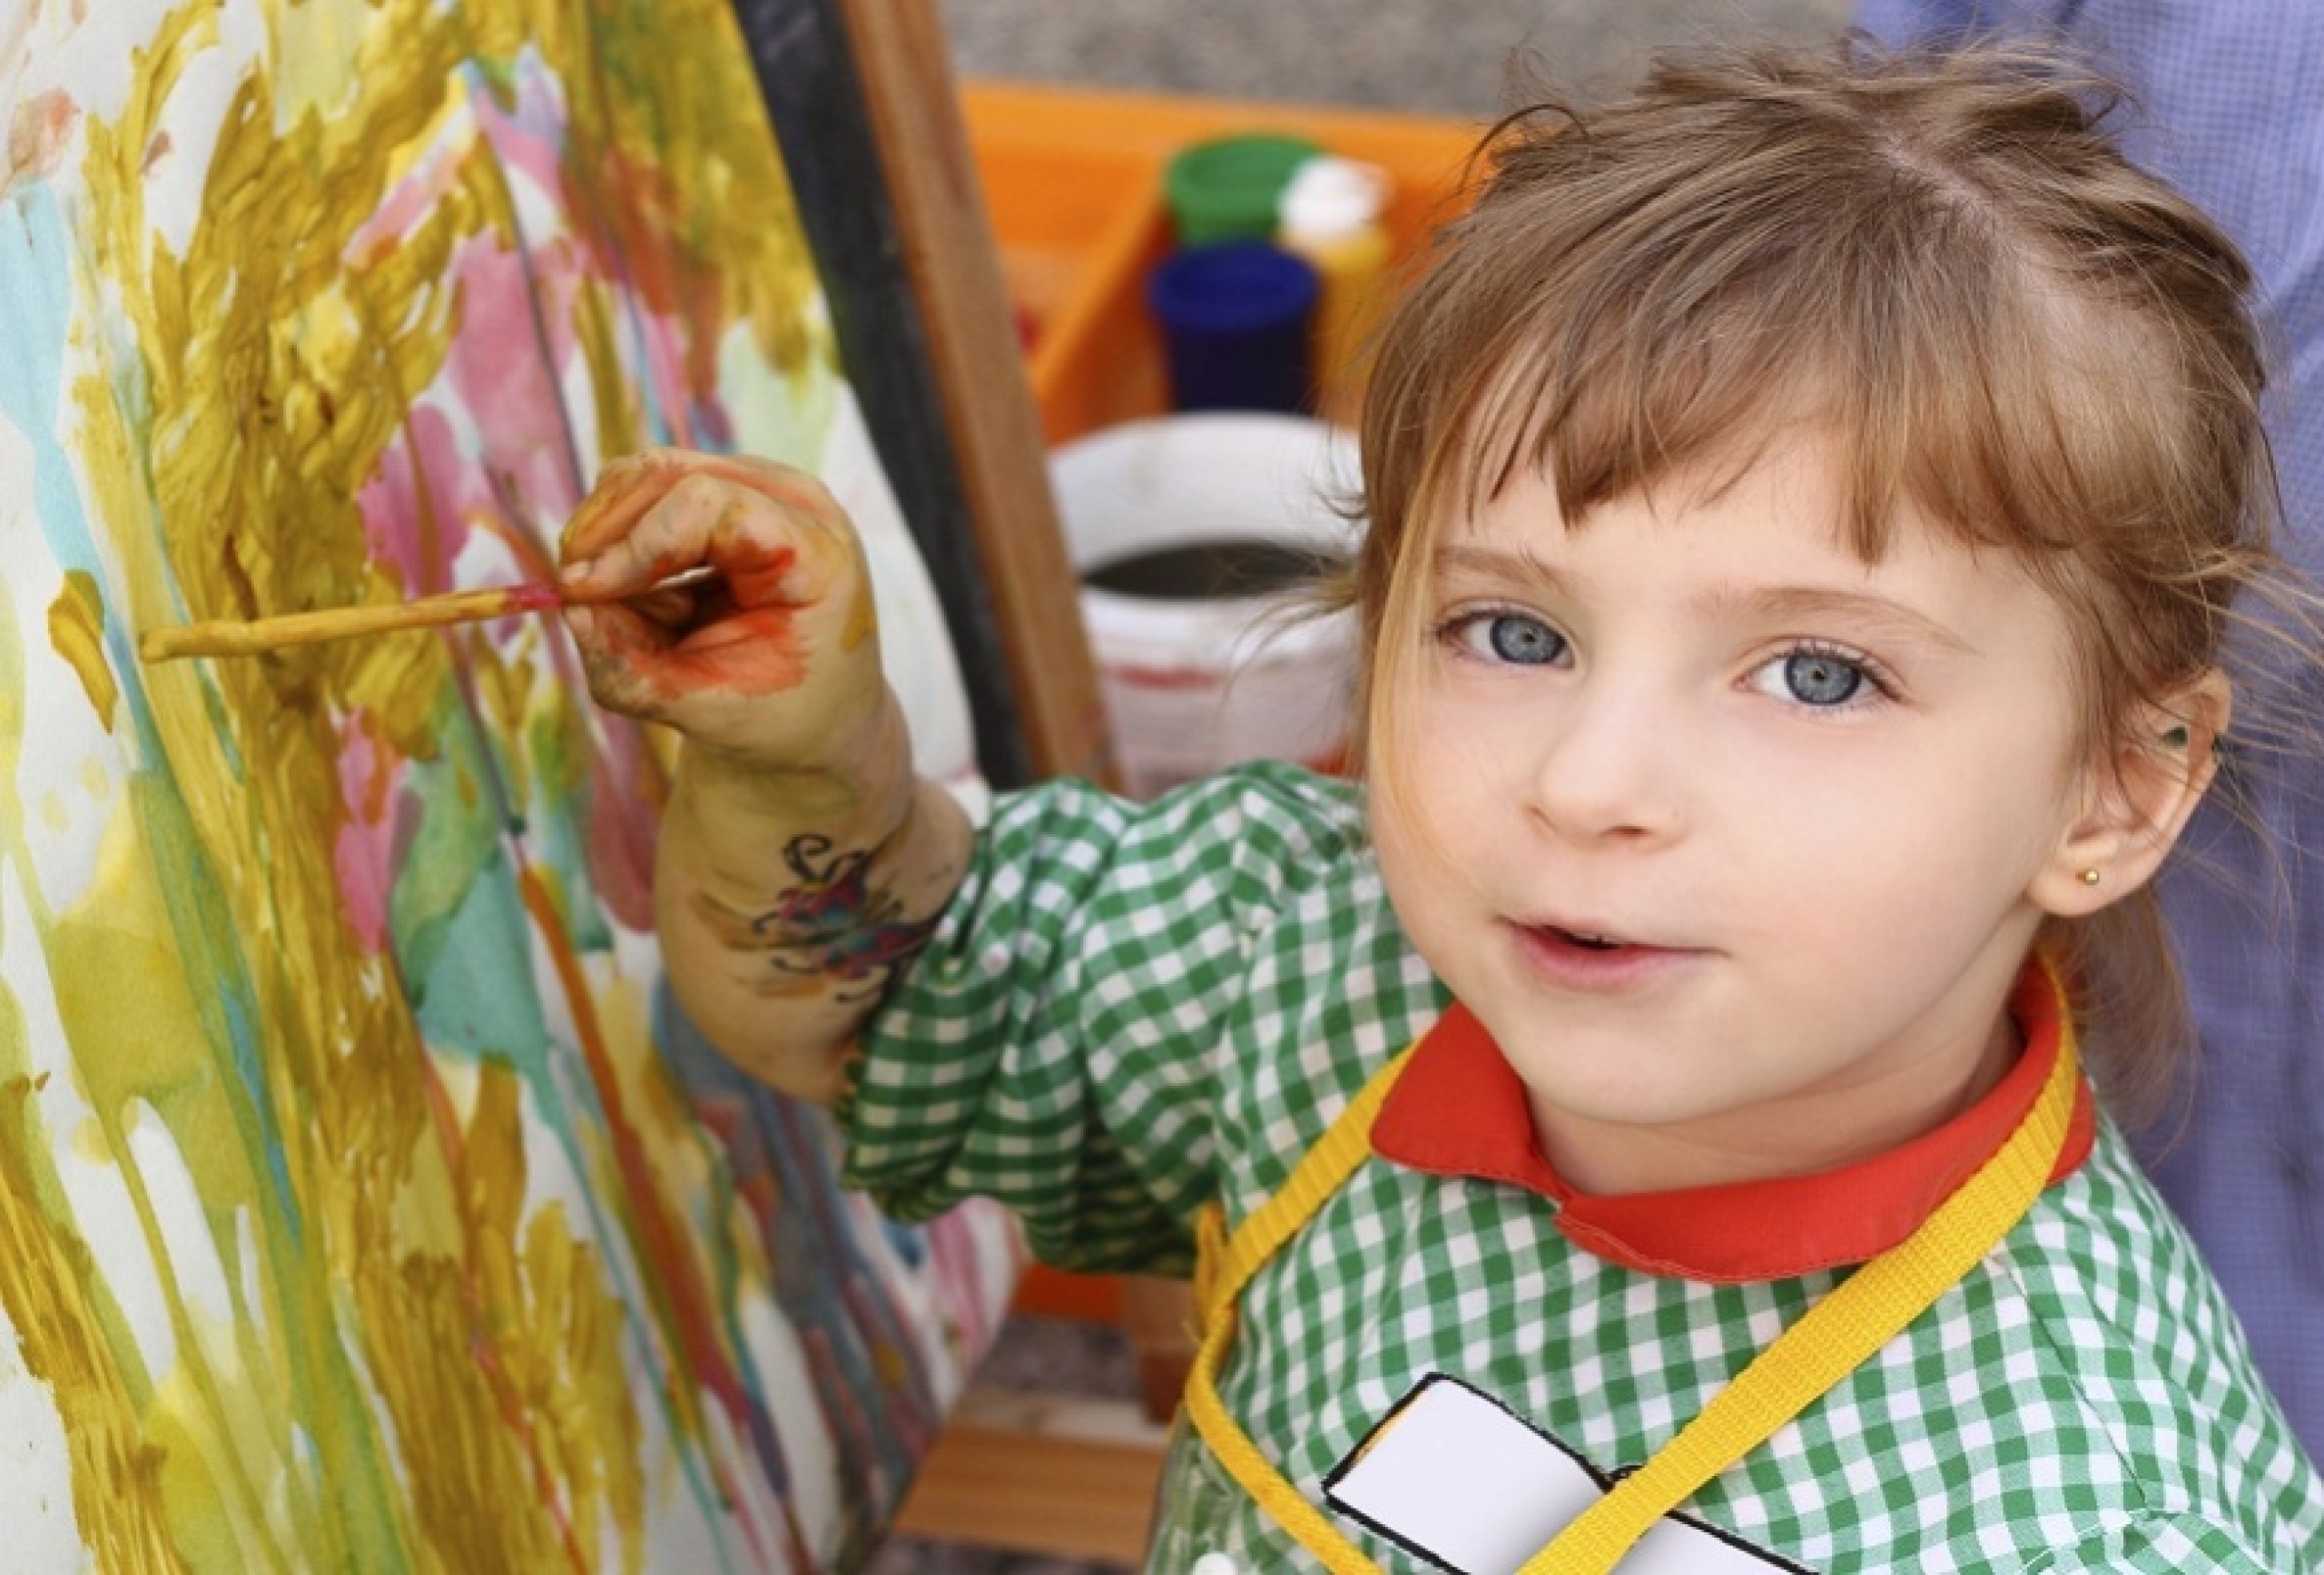 Будущий Ван Гог: развитие творчества ребенка